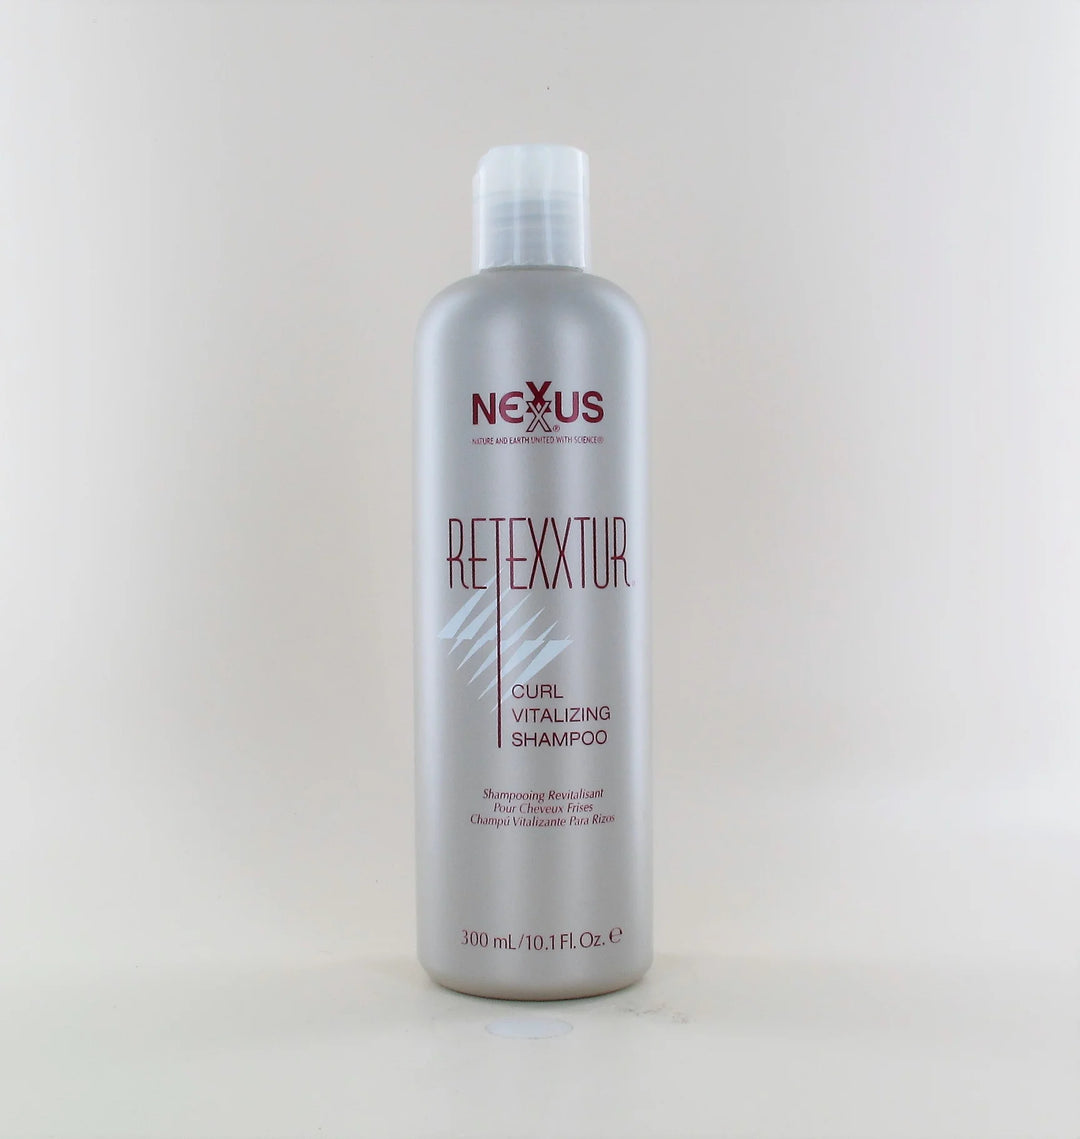 Nexxus Retexxtur Curl Vitalizing Shampoo